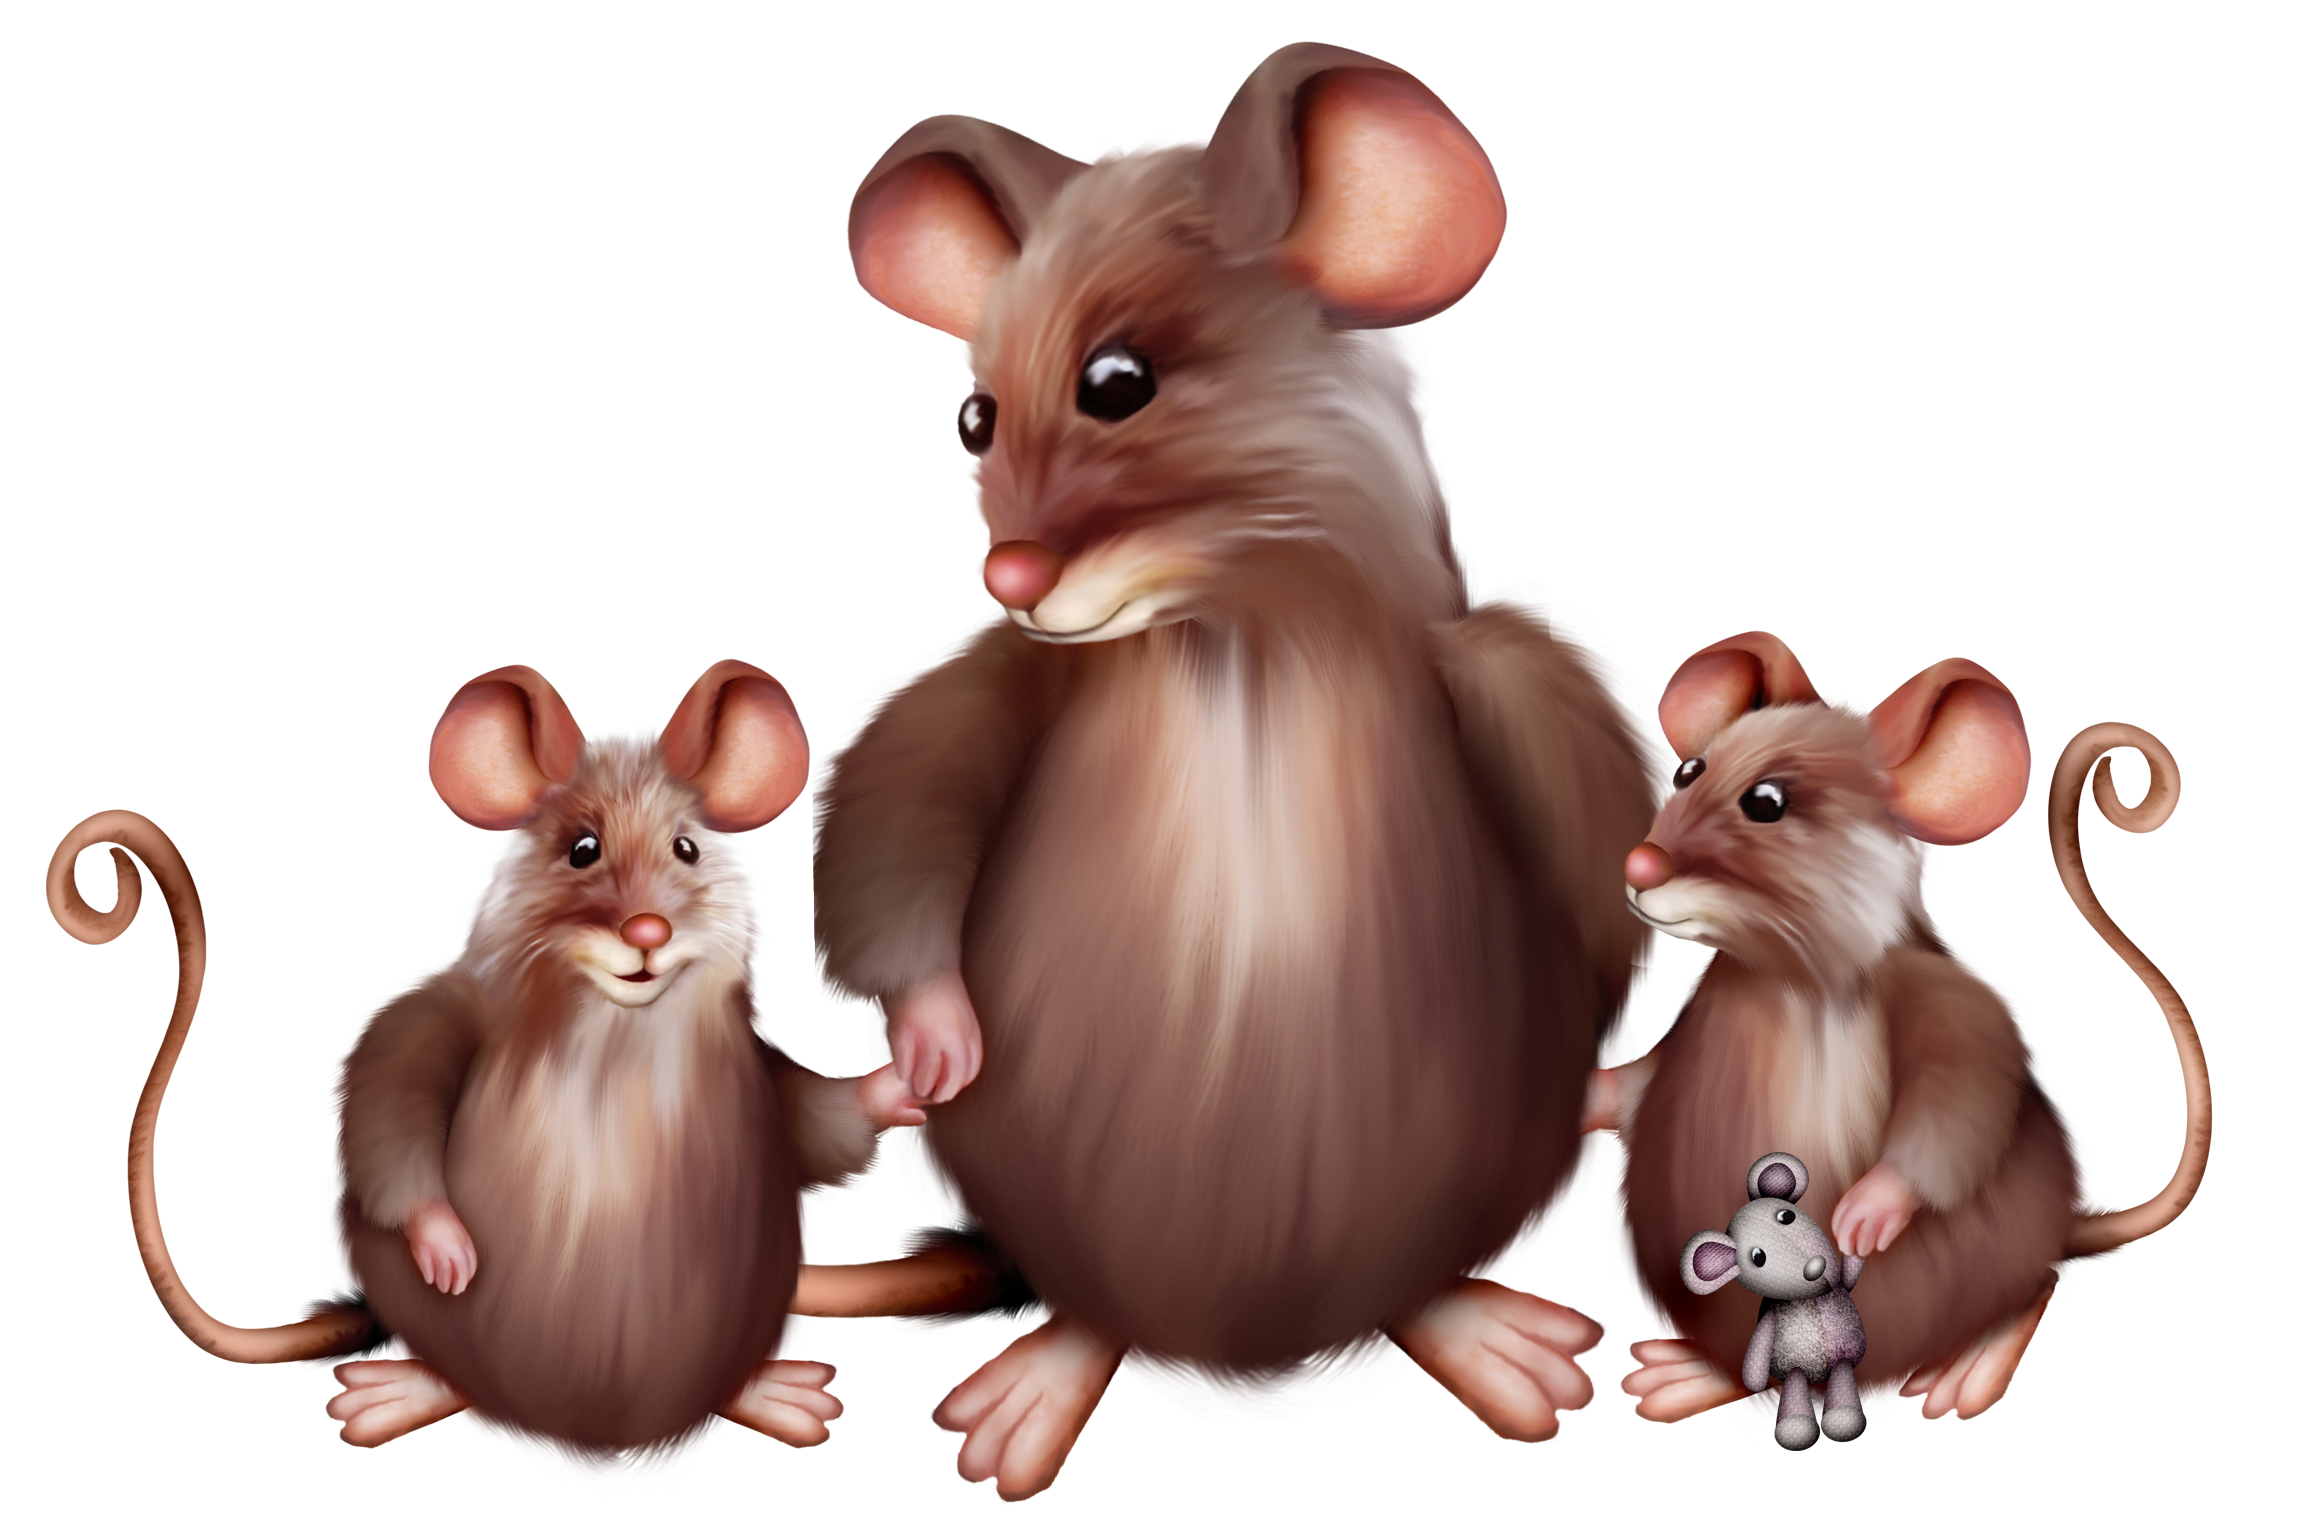 Three mouse. Два мышонка. Три мышонка. Мышь и мышата для детей. Мышка с мышатами для детей.